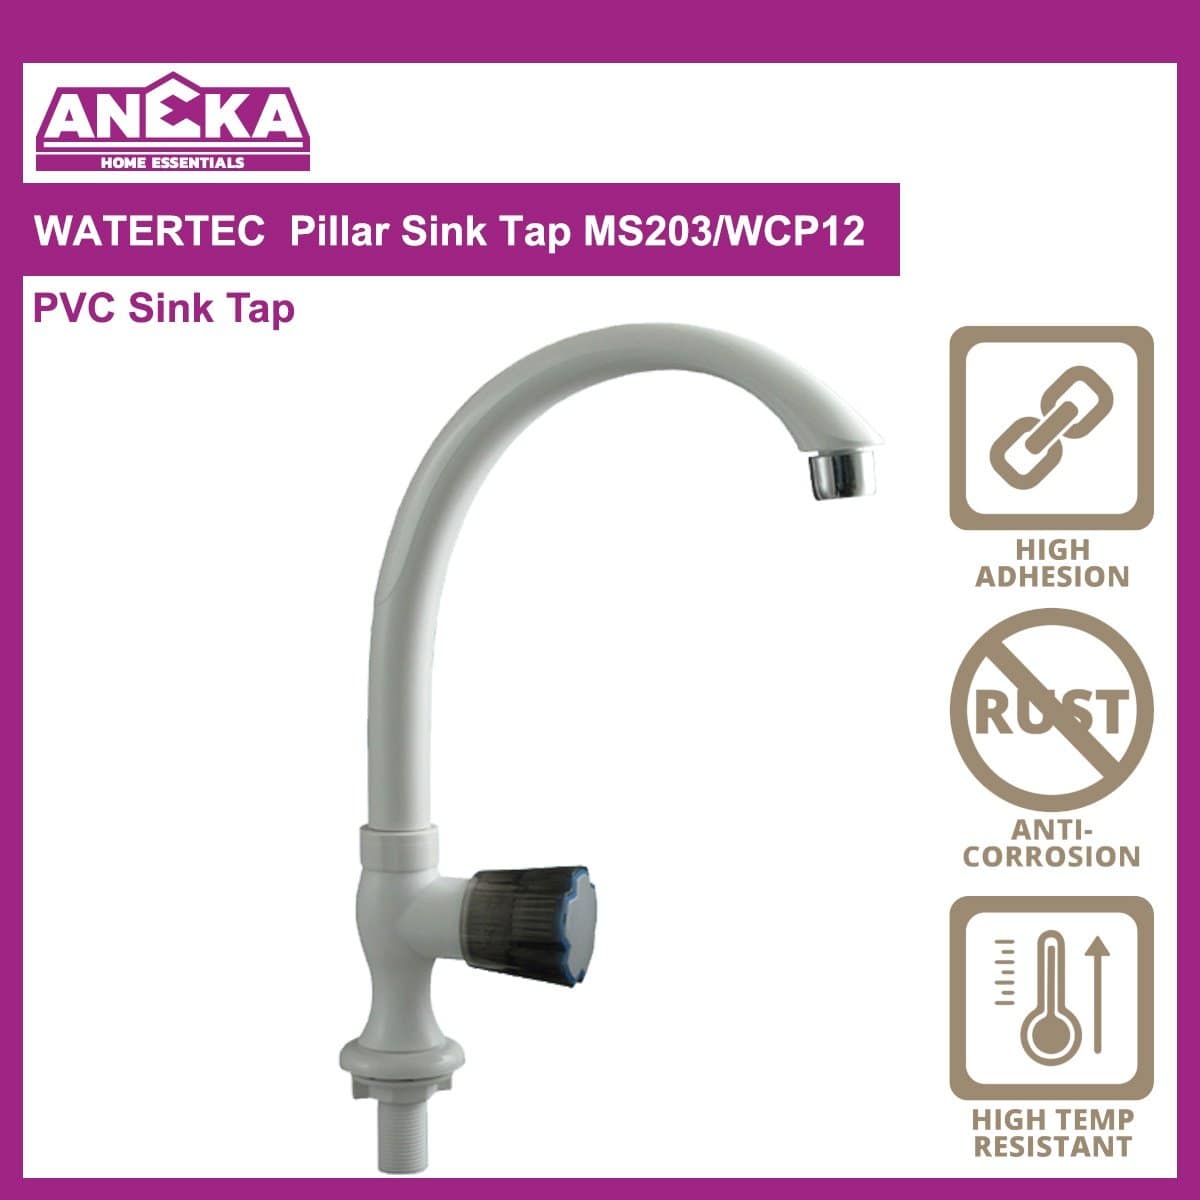 WATERTEC Pillar Sink Tap MS203/WCP12